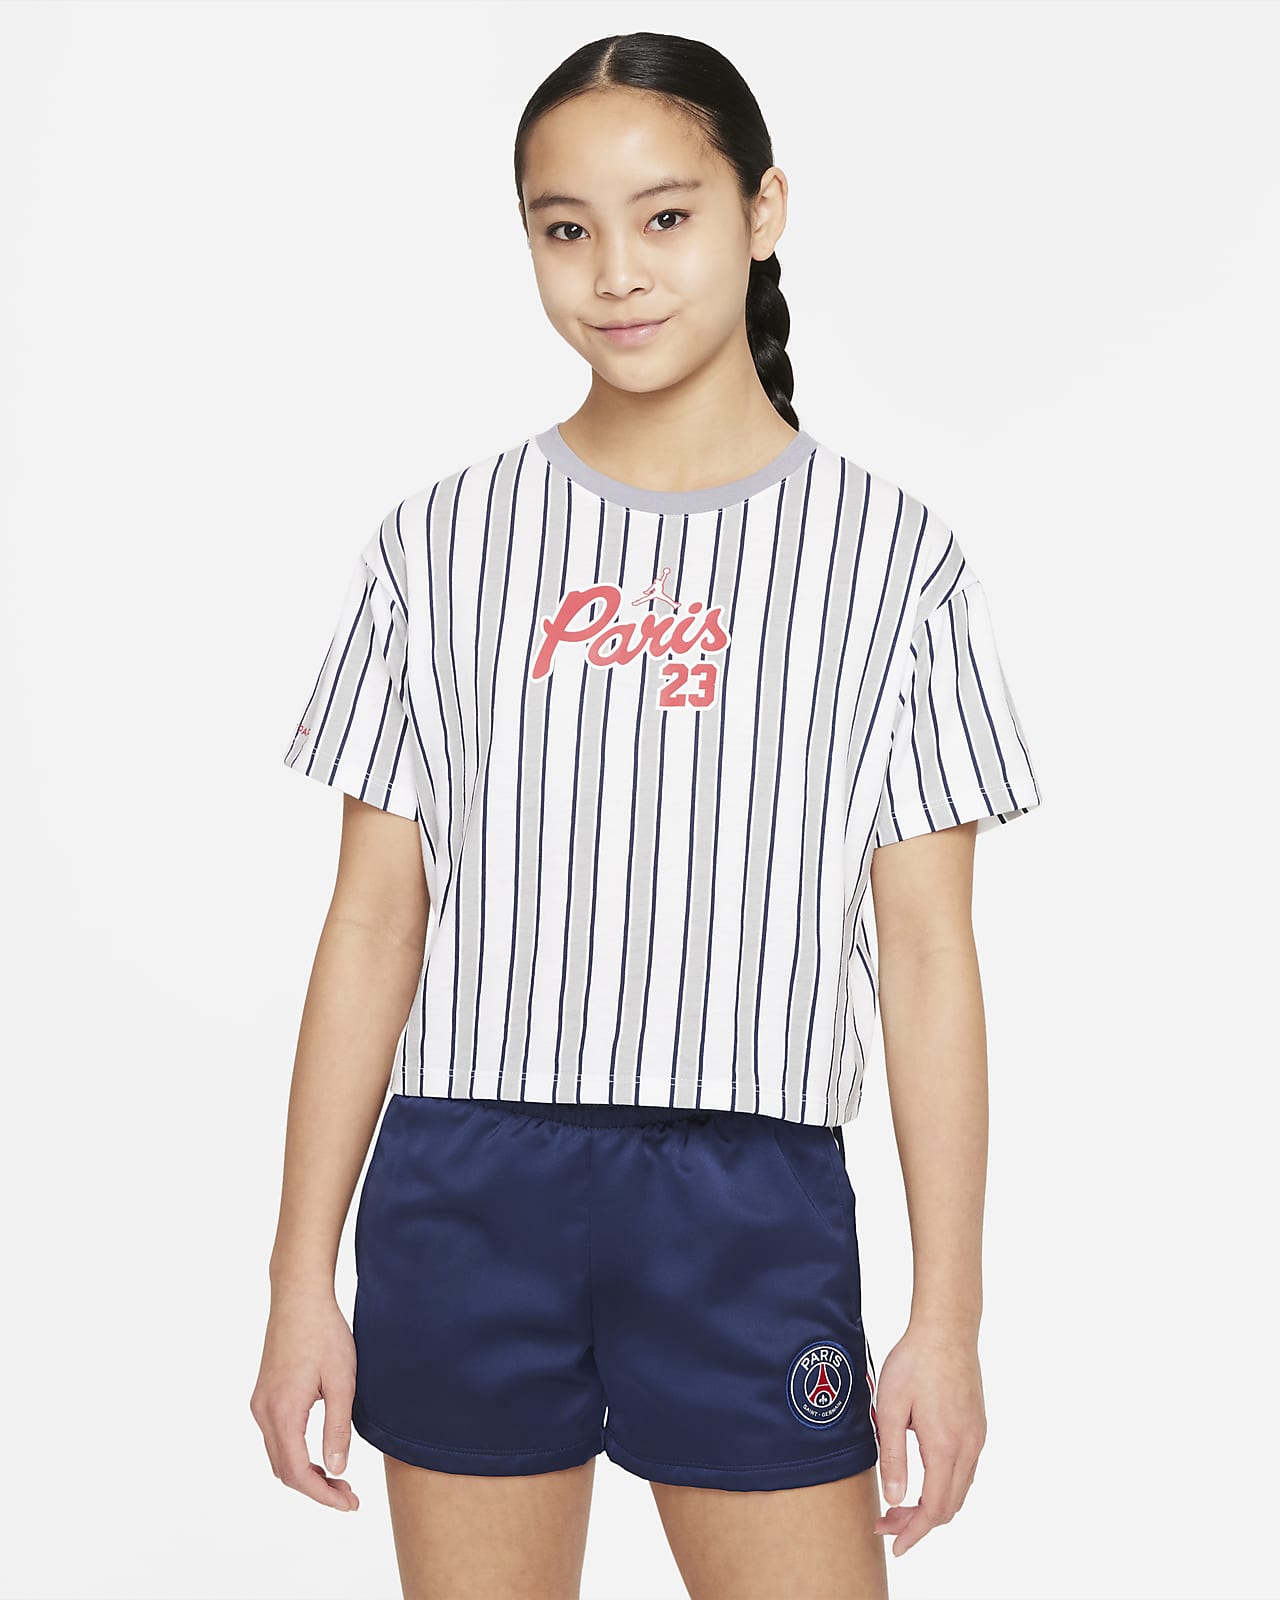 T-shirt Paris Saint-Germain för ungdom (tjejer)